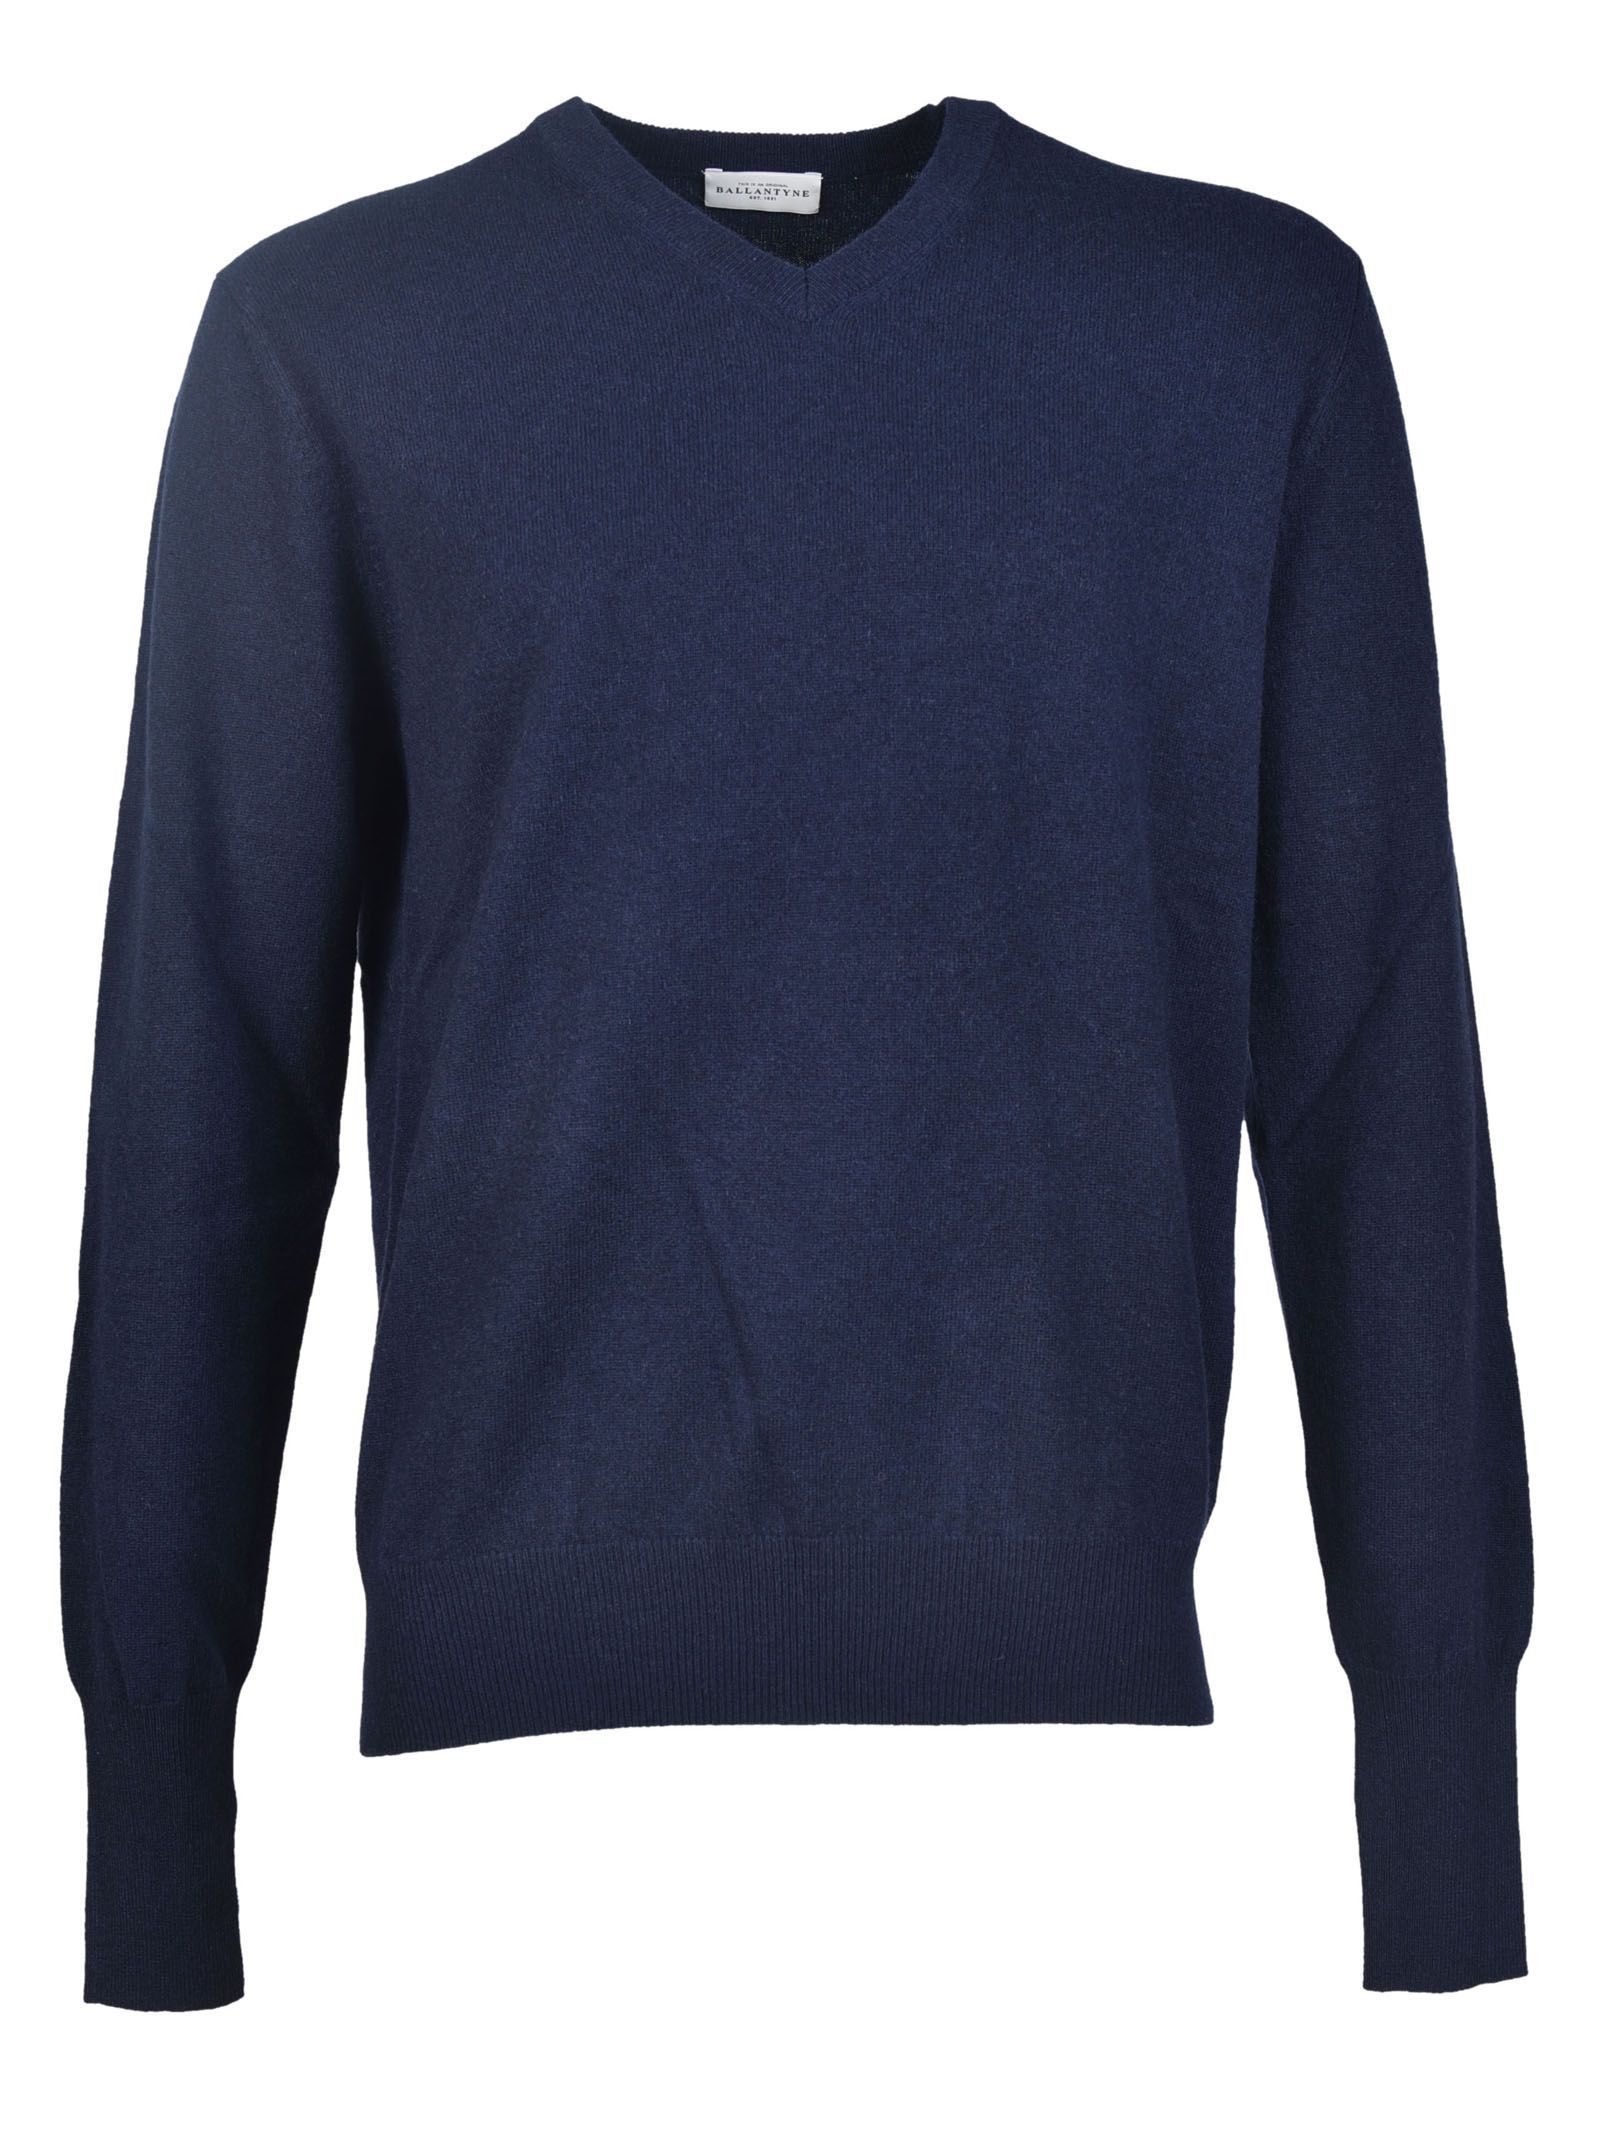 Ballantyne - Ballantyne Cashmere Sweater - Nero Navy, Men's Sweaters ...